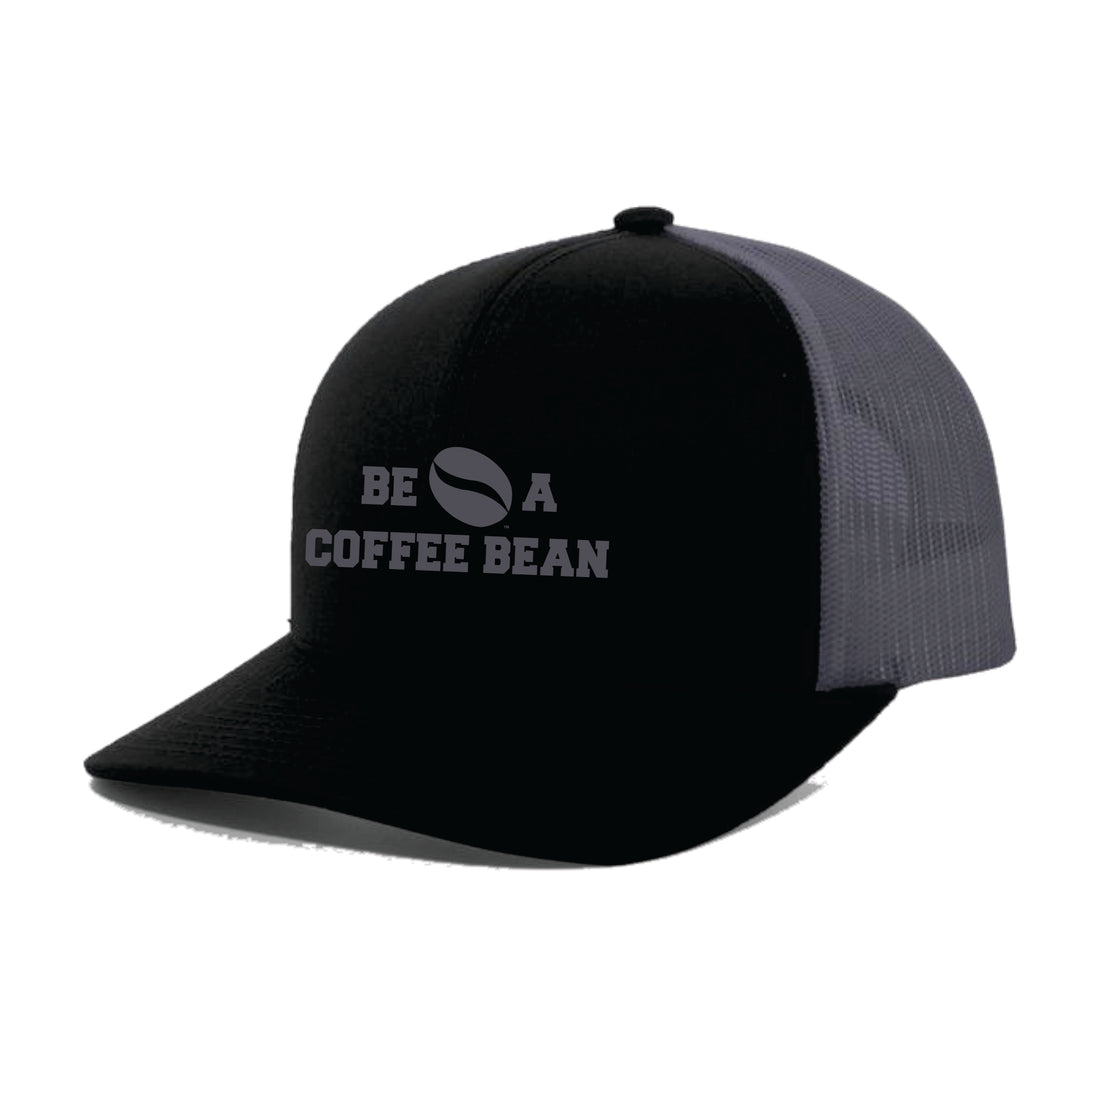 Be A Coffee Bean Trucker Snapback Cap